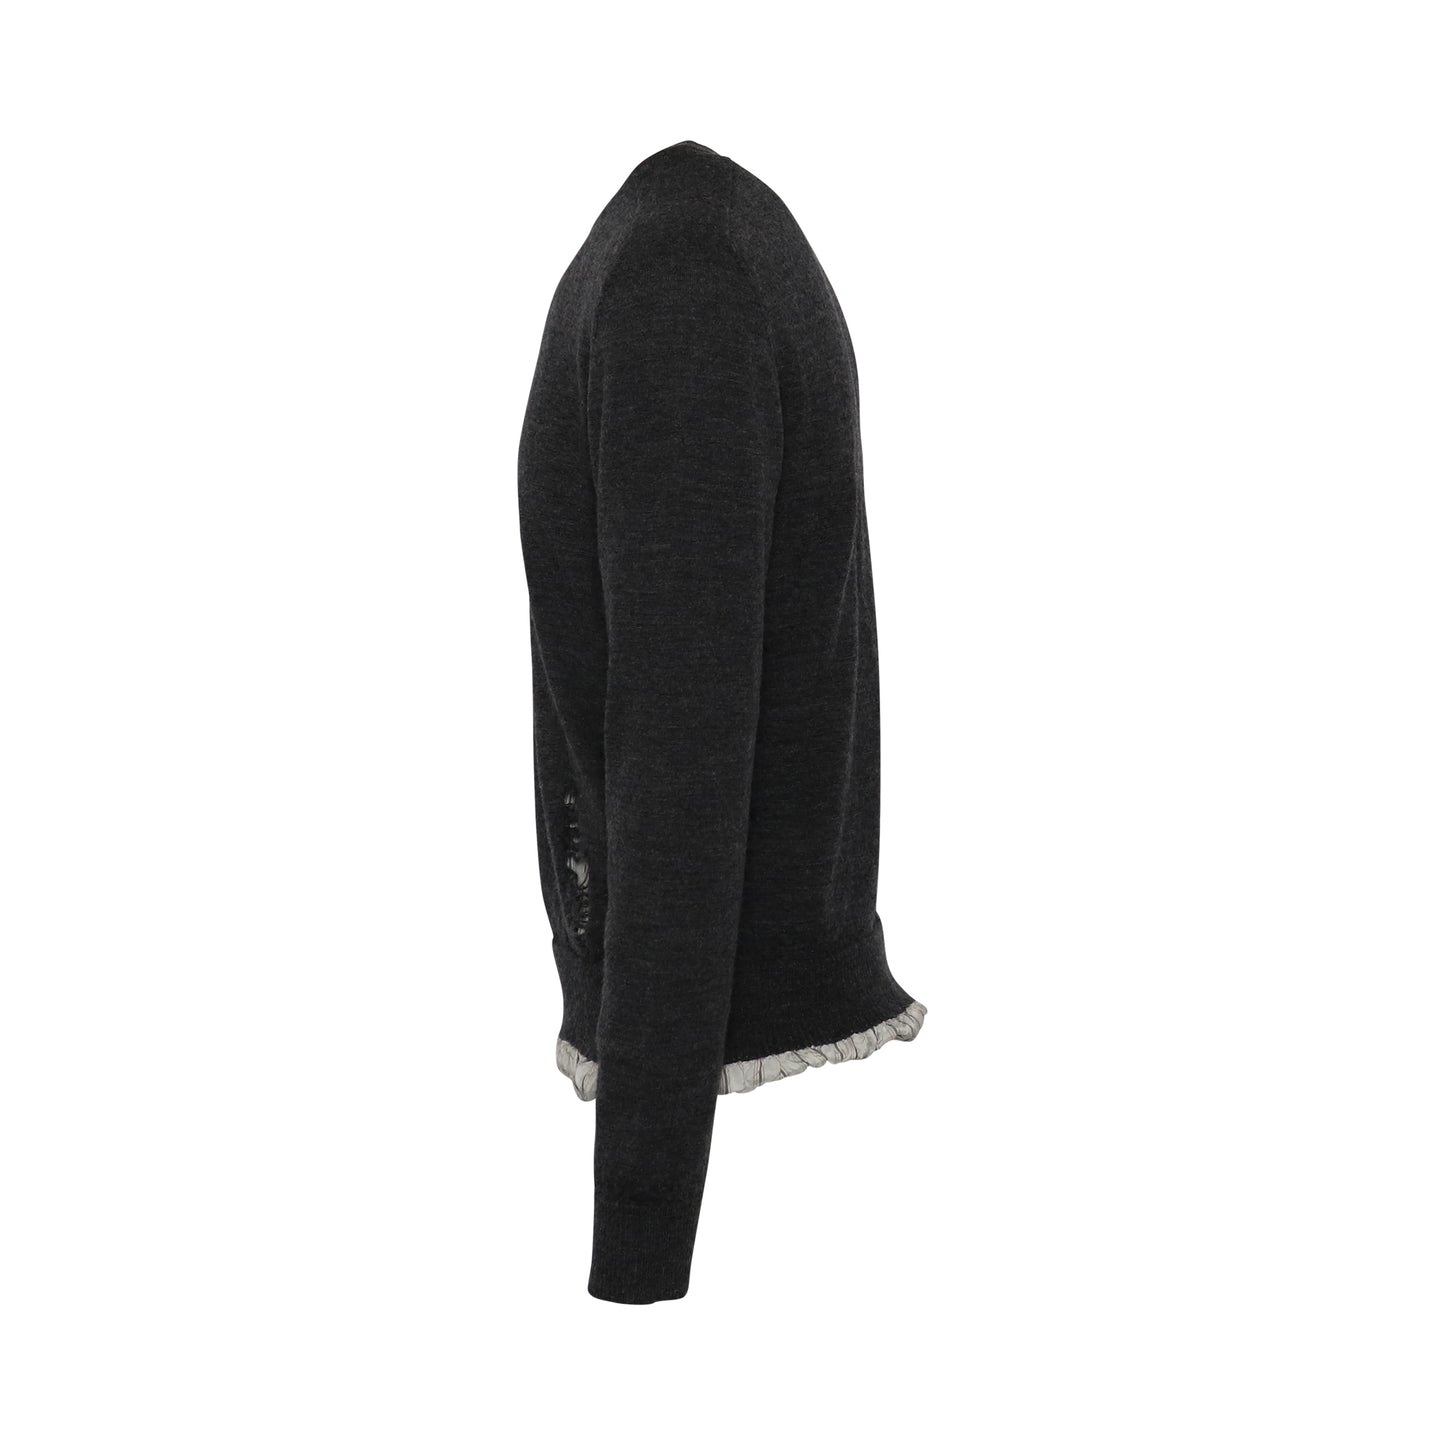 Distressed Knit Layered Sweater in Dark Grey